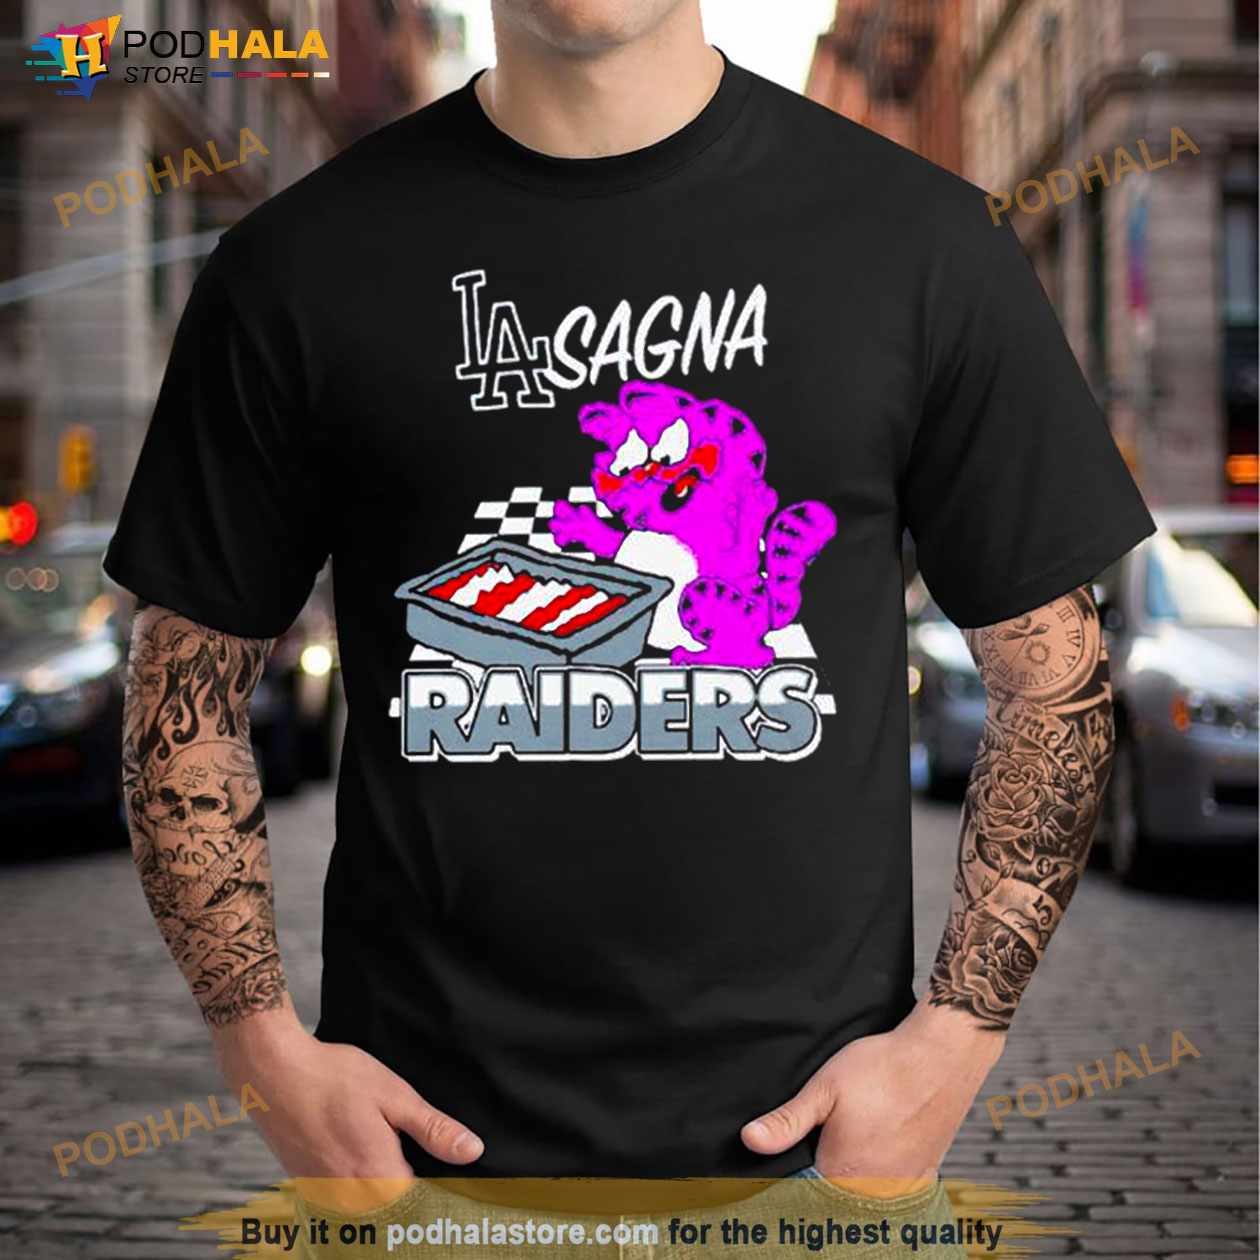 dodgers raiders shirt